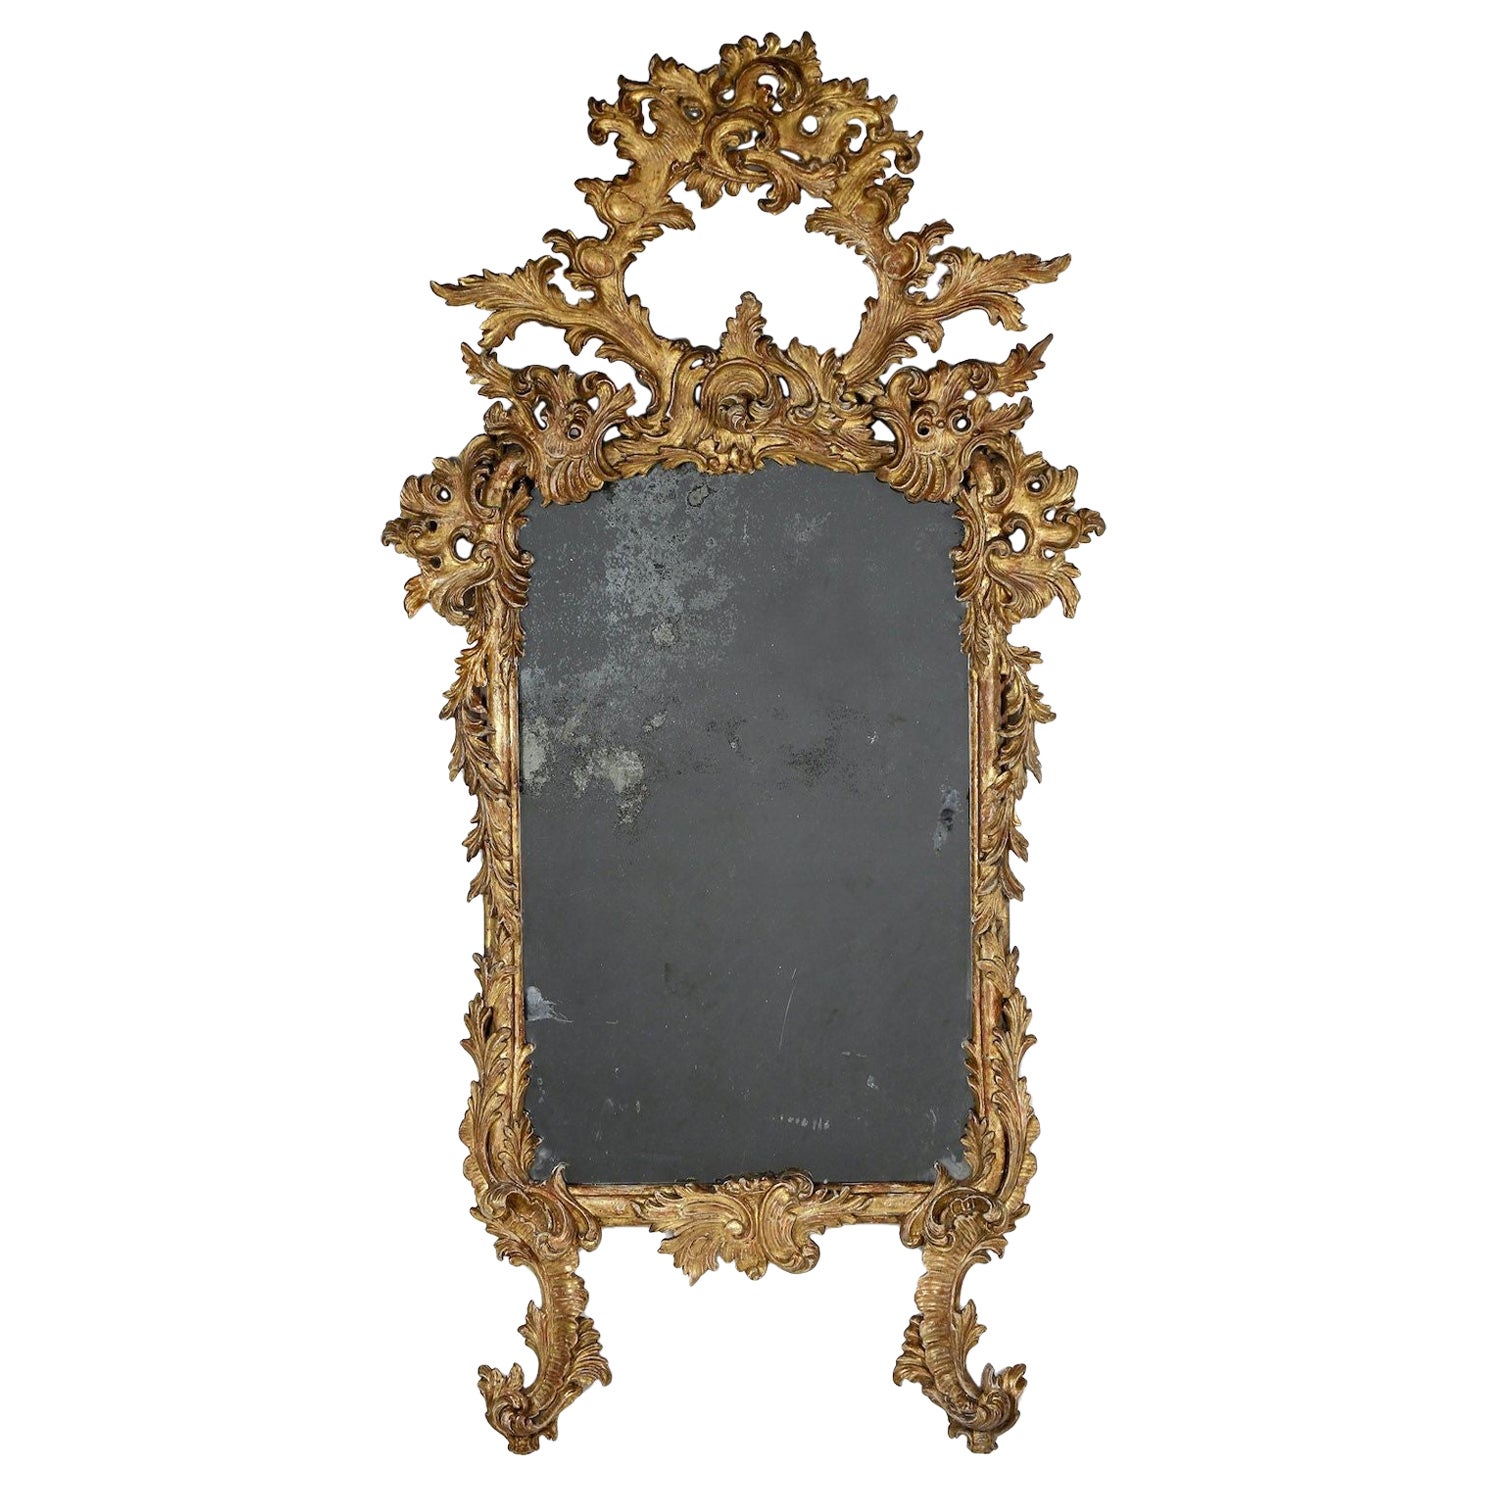 19th c. Italian Rococo Giltwood Mirror with Original Mirror Plate